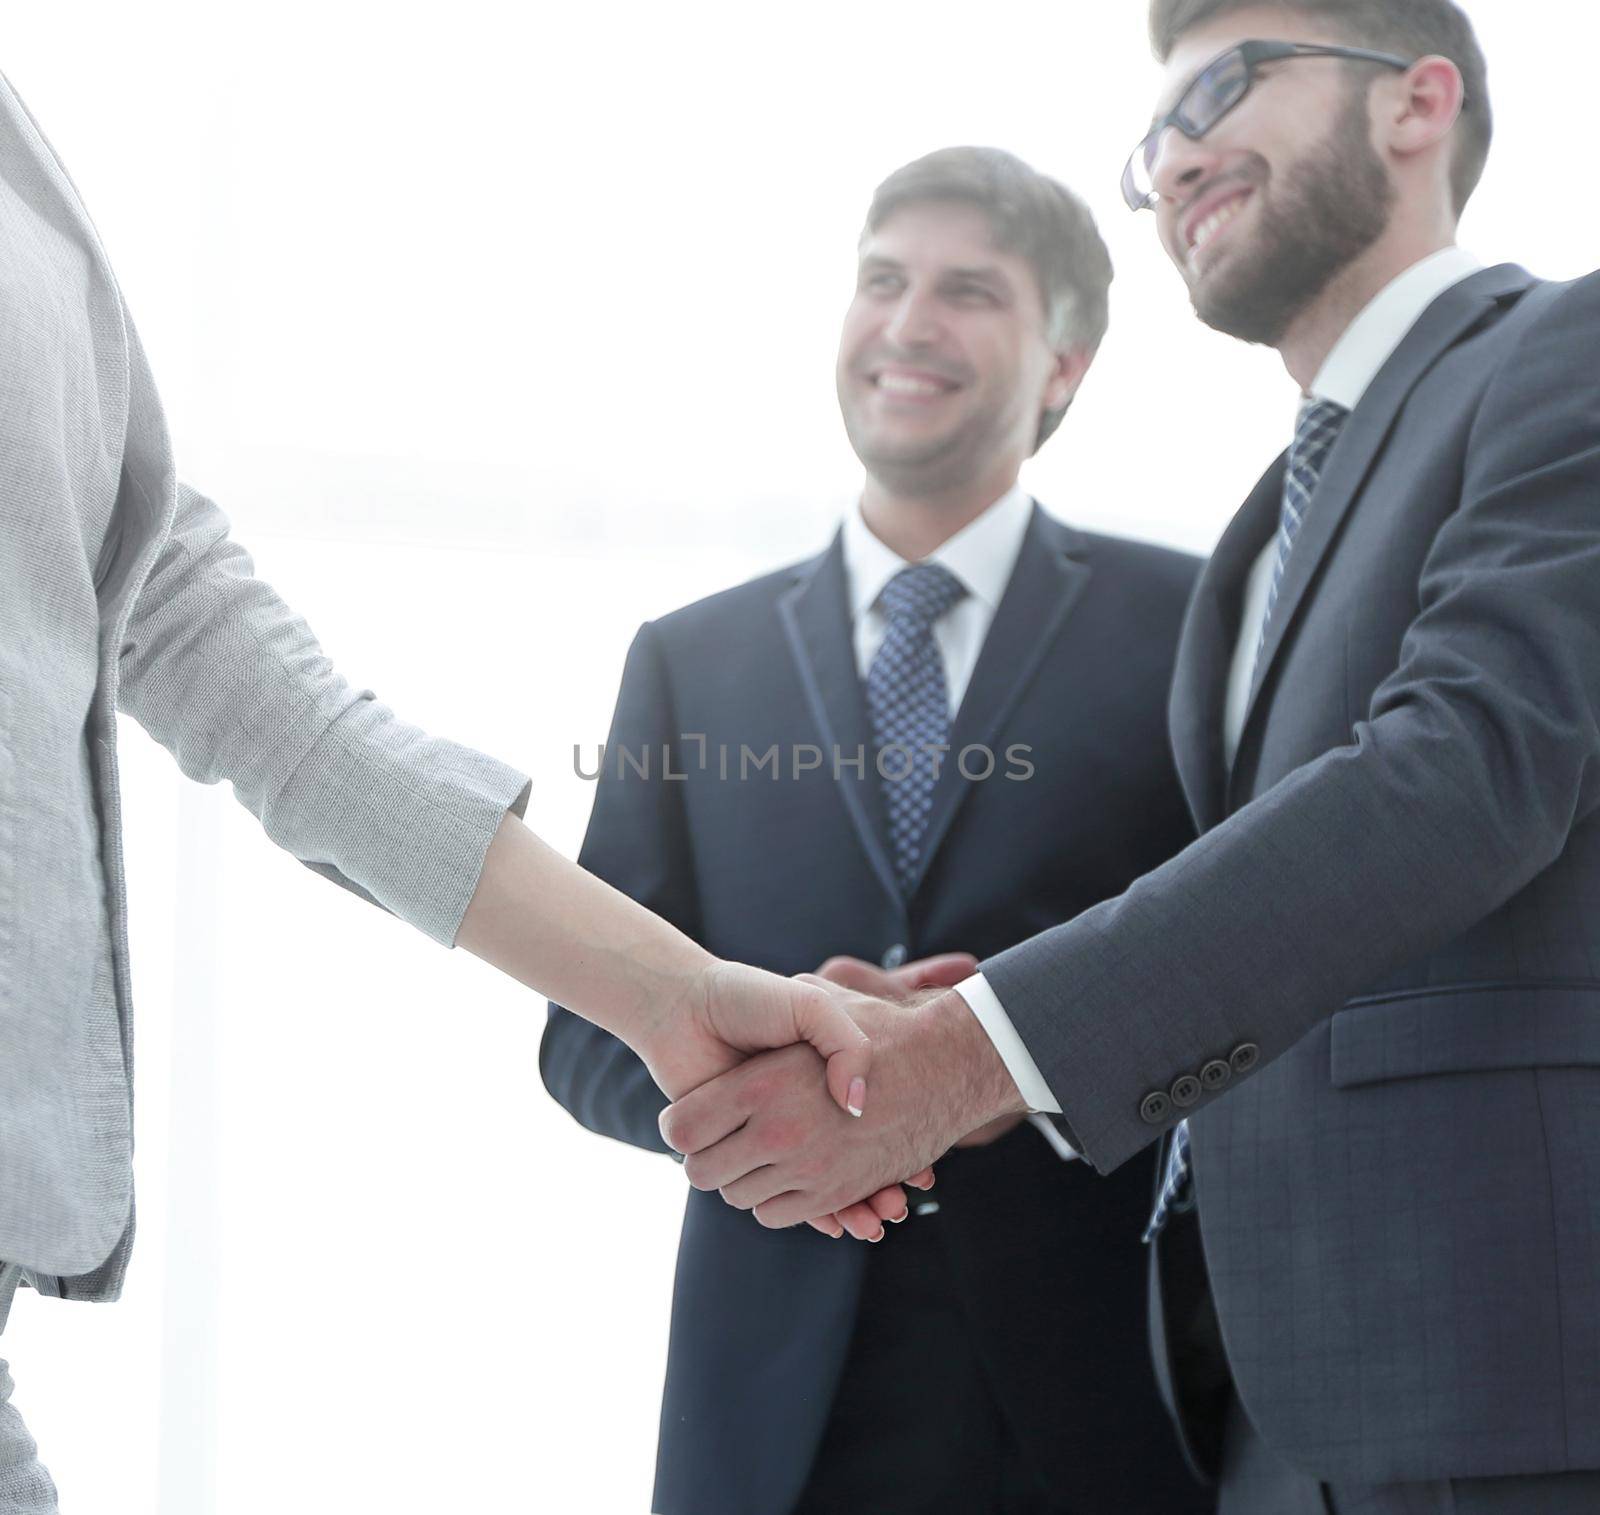 Concept of partnership. Handshake of business people